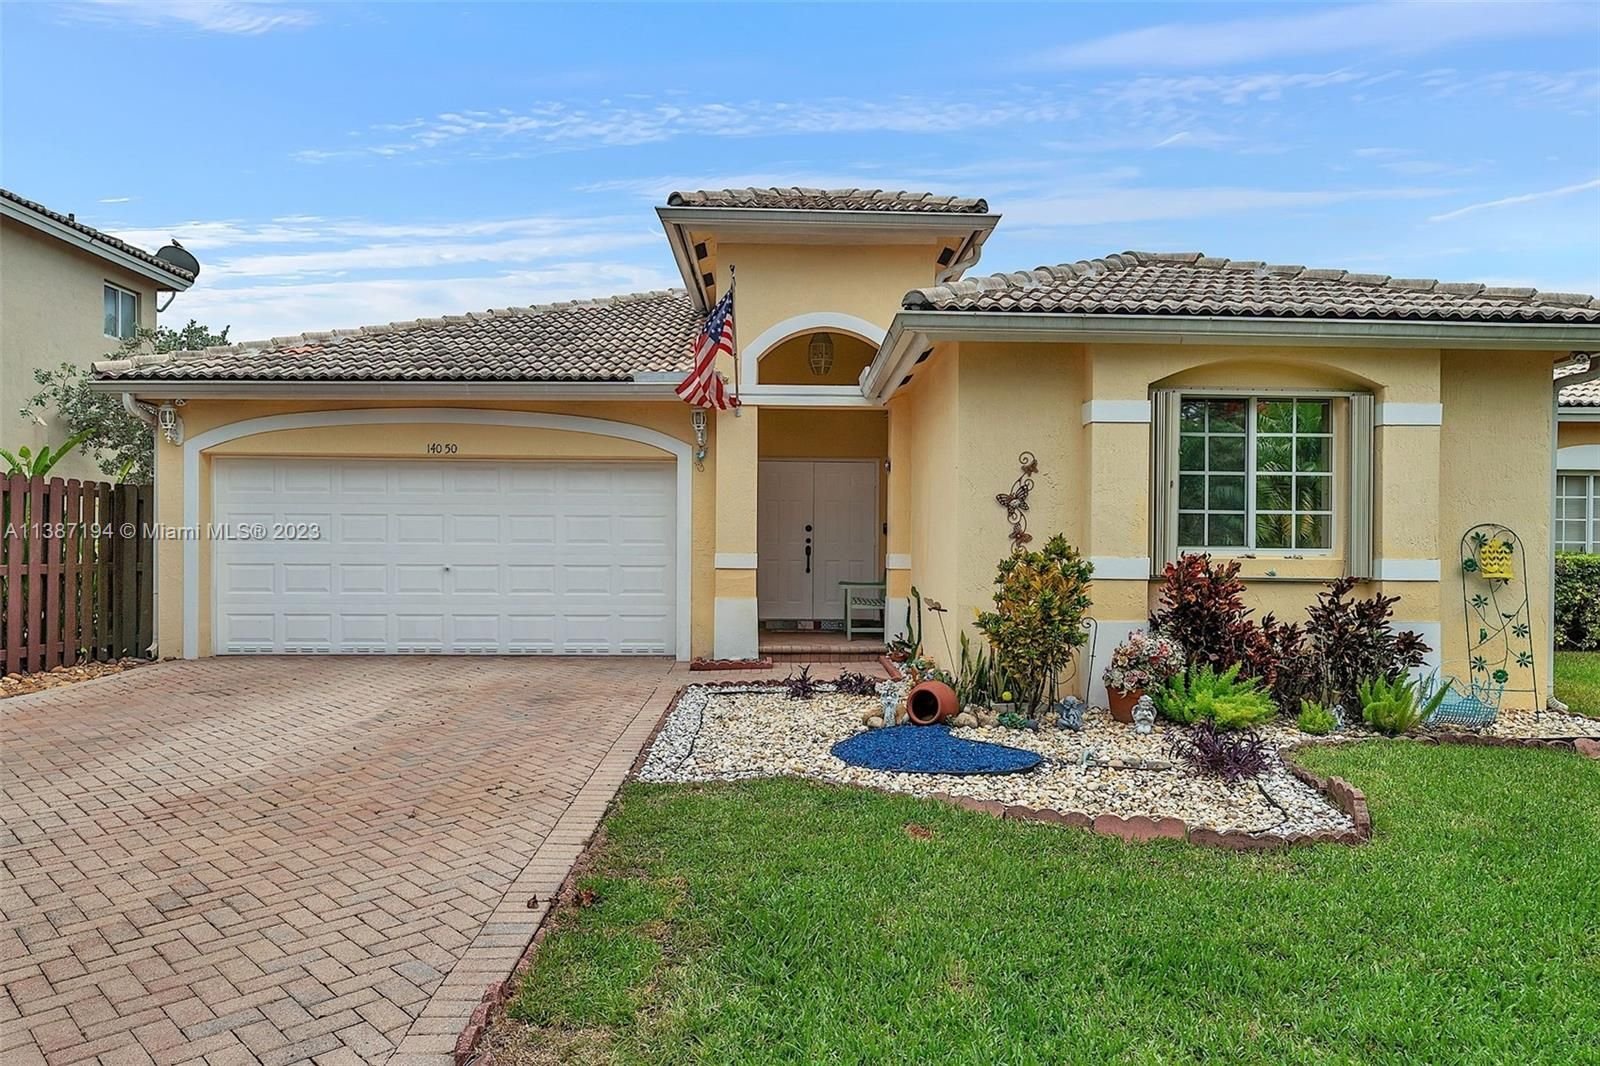 Real estate property located at 14050 154th Pl, Miami-Dade County, Miami, FL